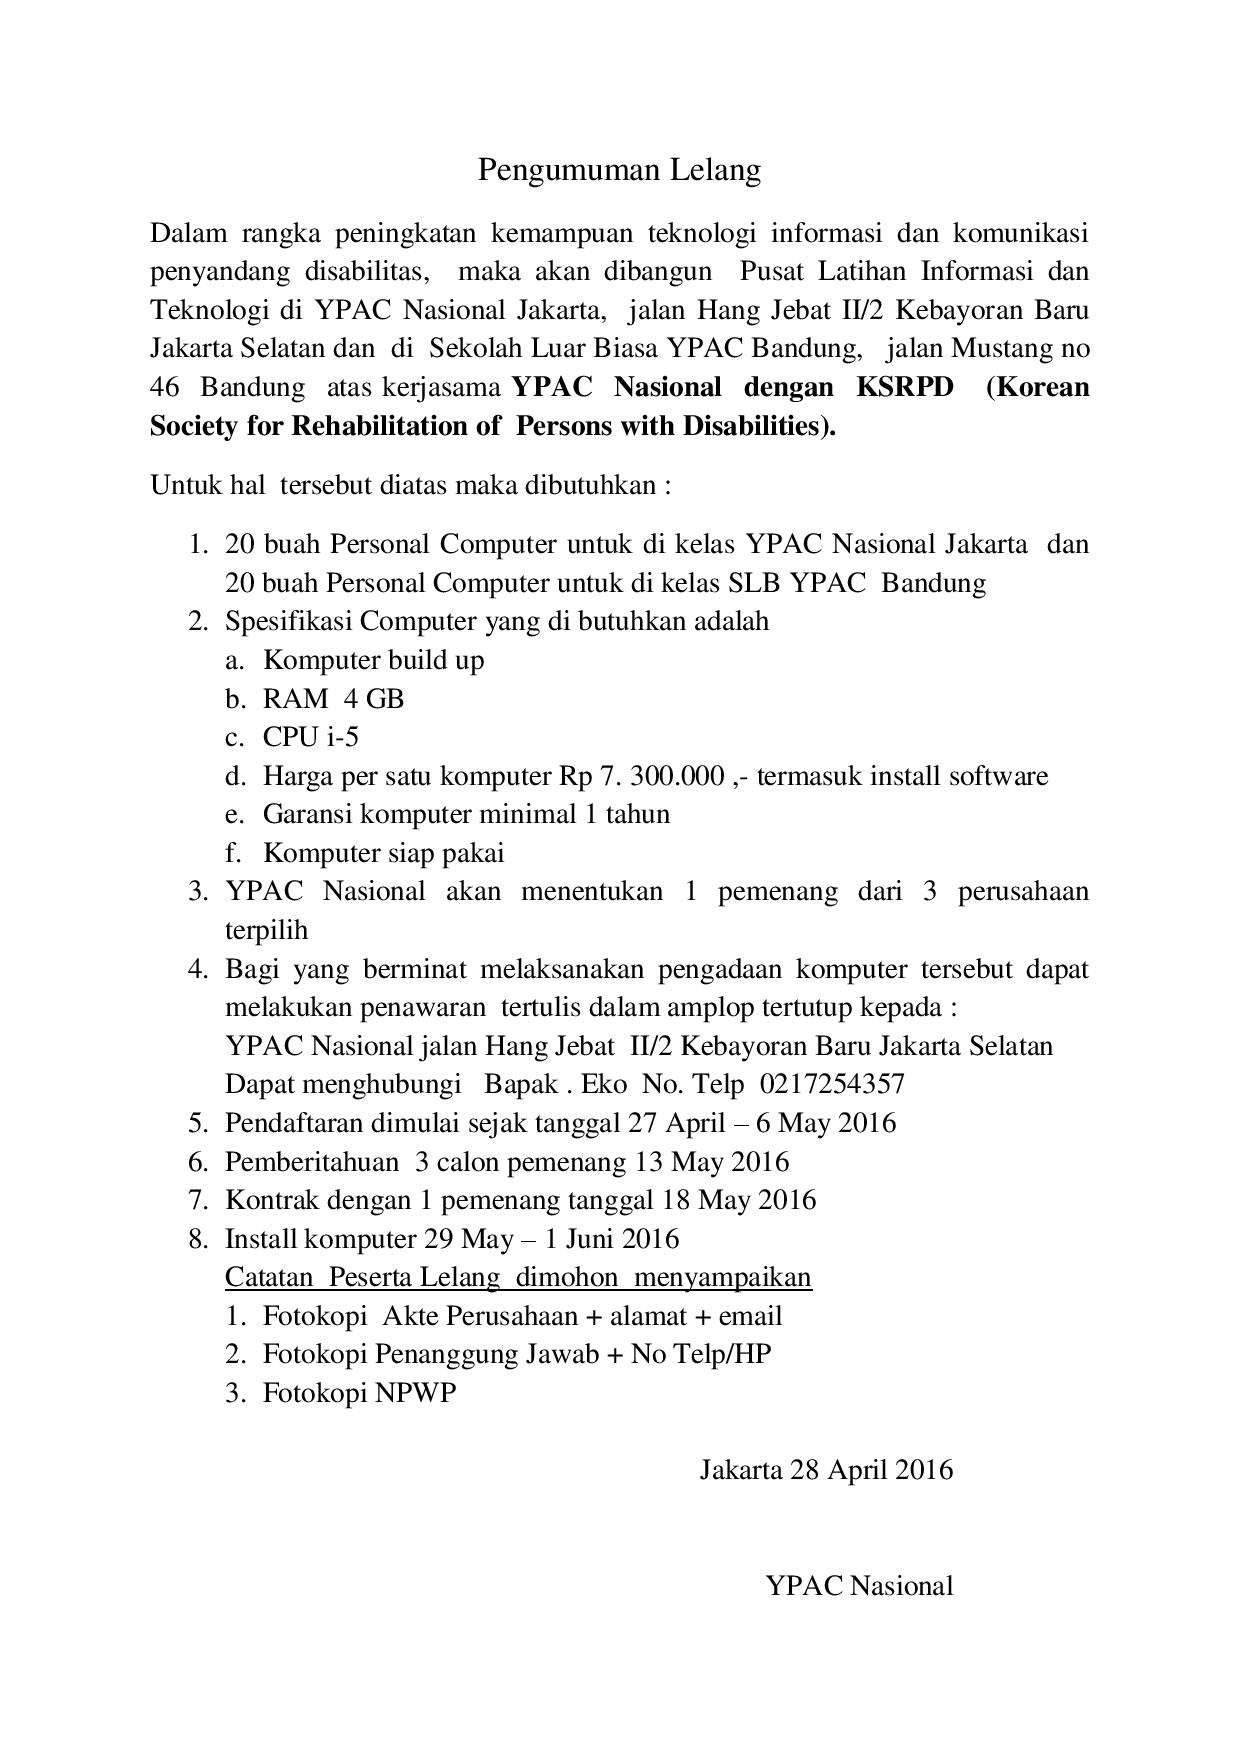 Pengumuman Lelang PC YPAC Jakarta dan SLB Bandung